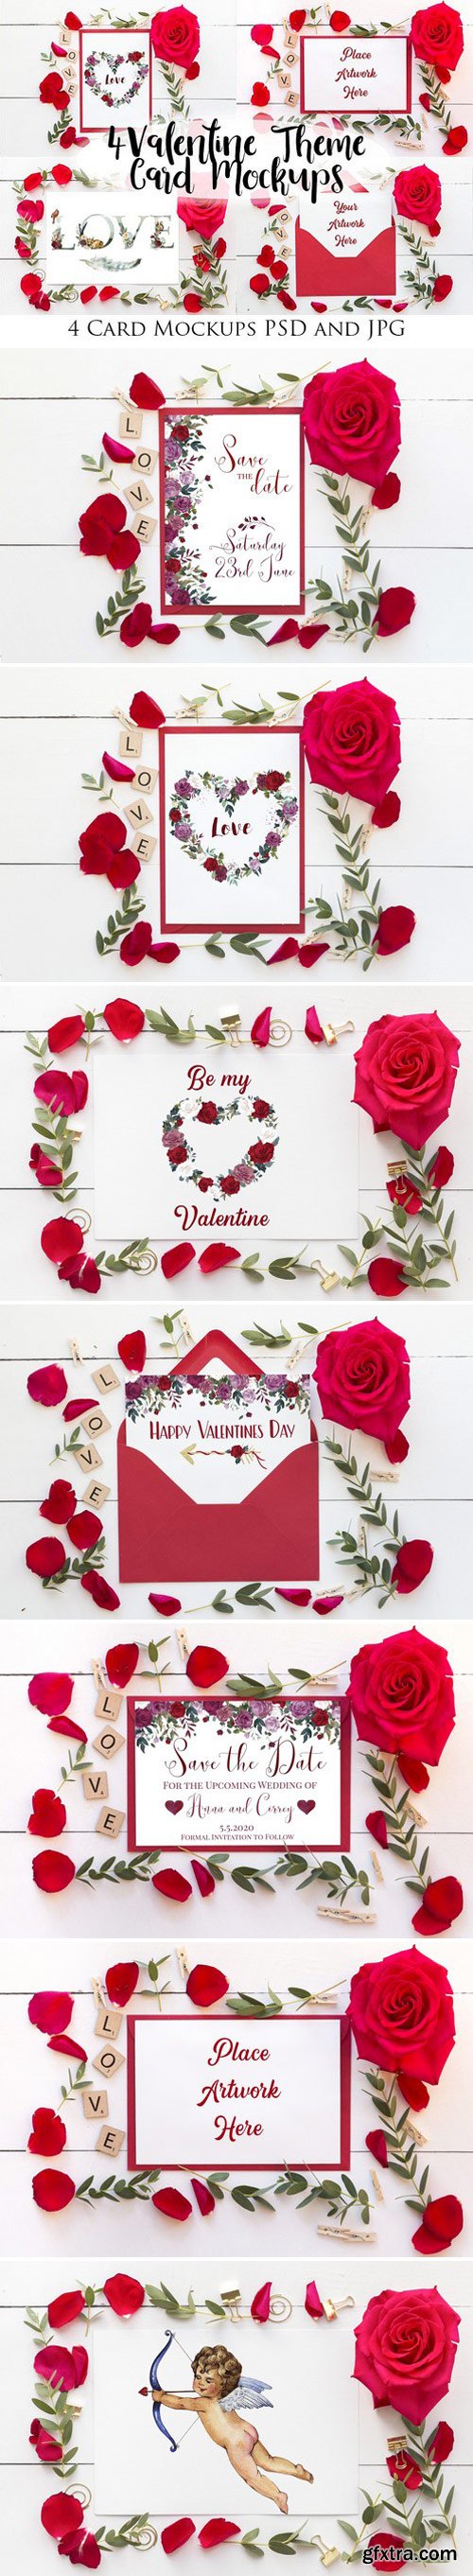 CM - 4 Valentine Theme Card Mockups 2204991